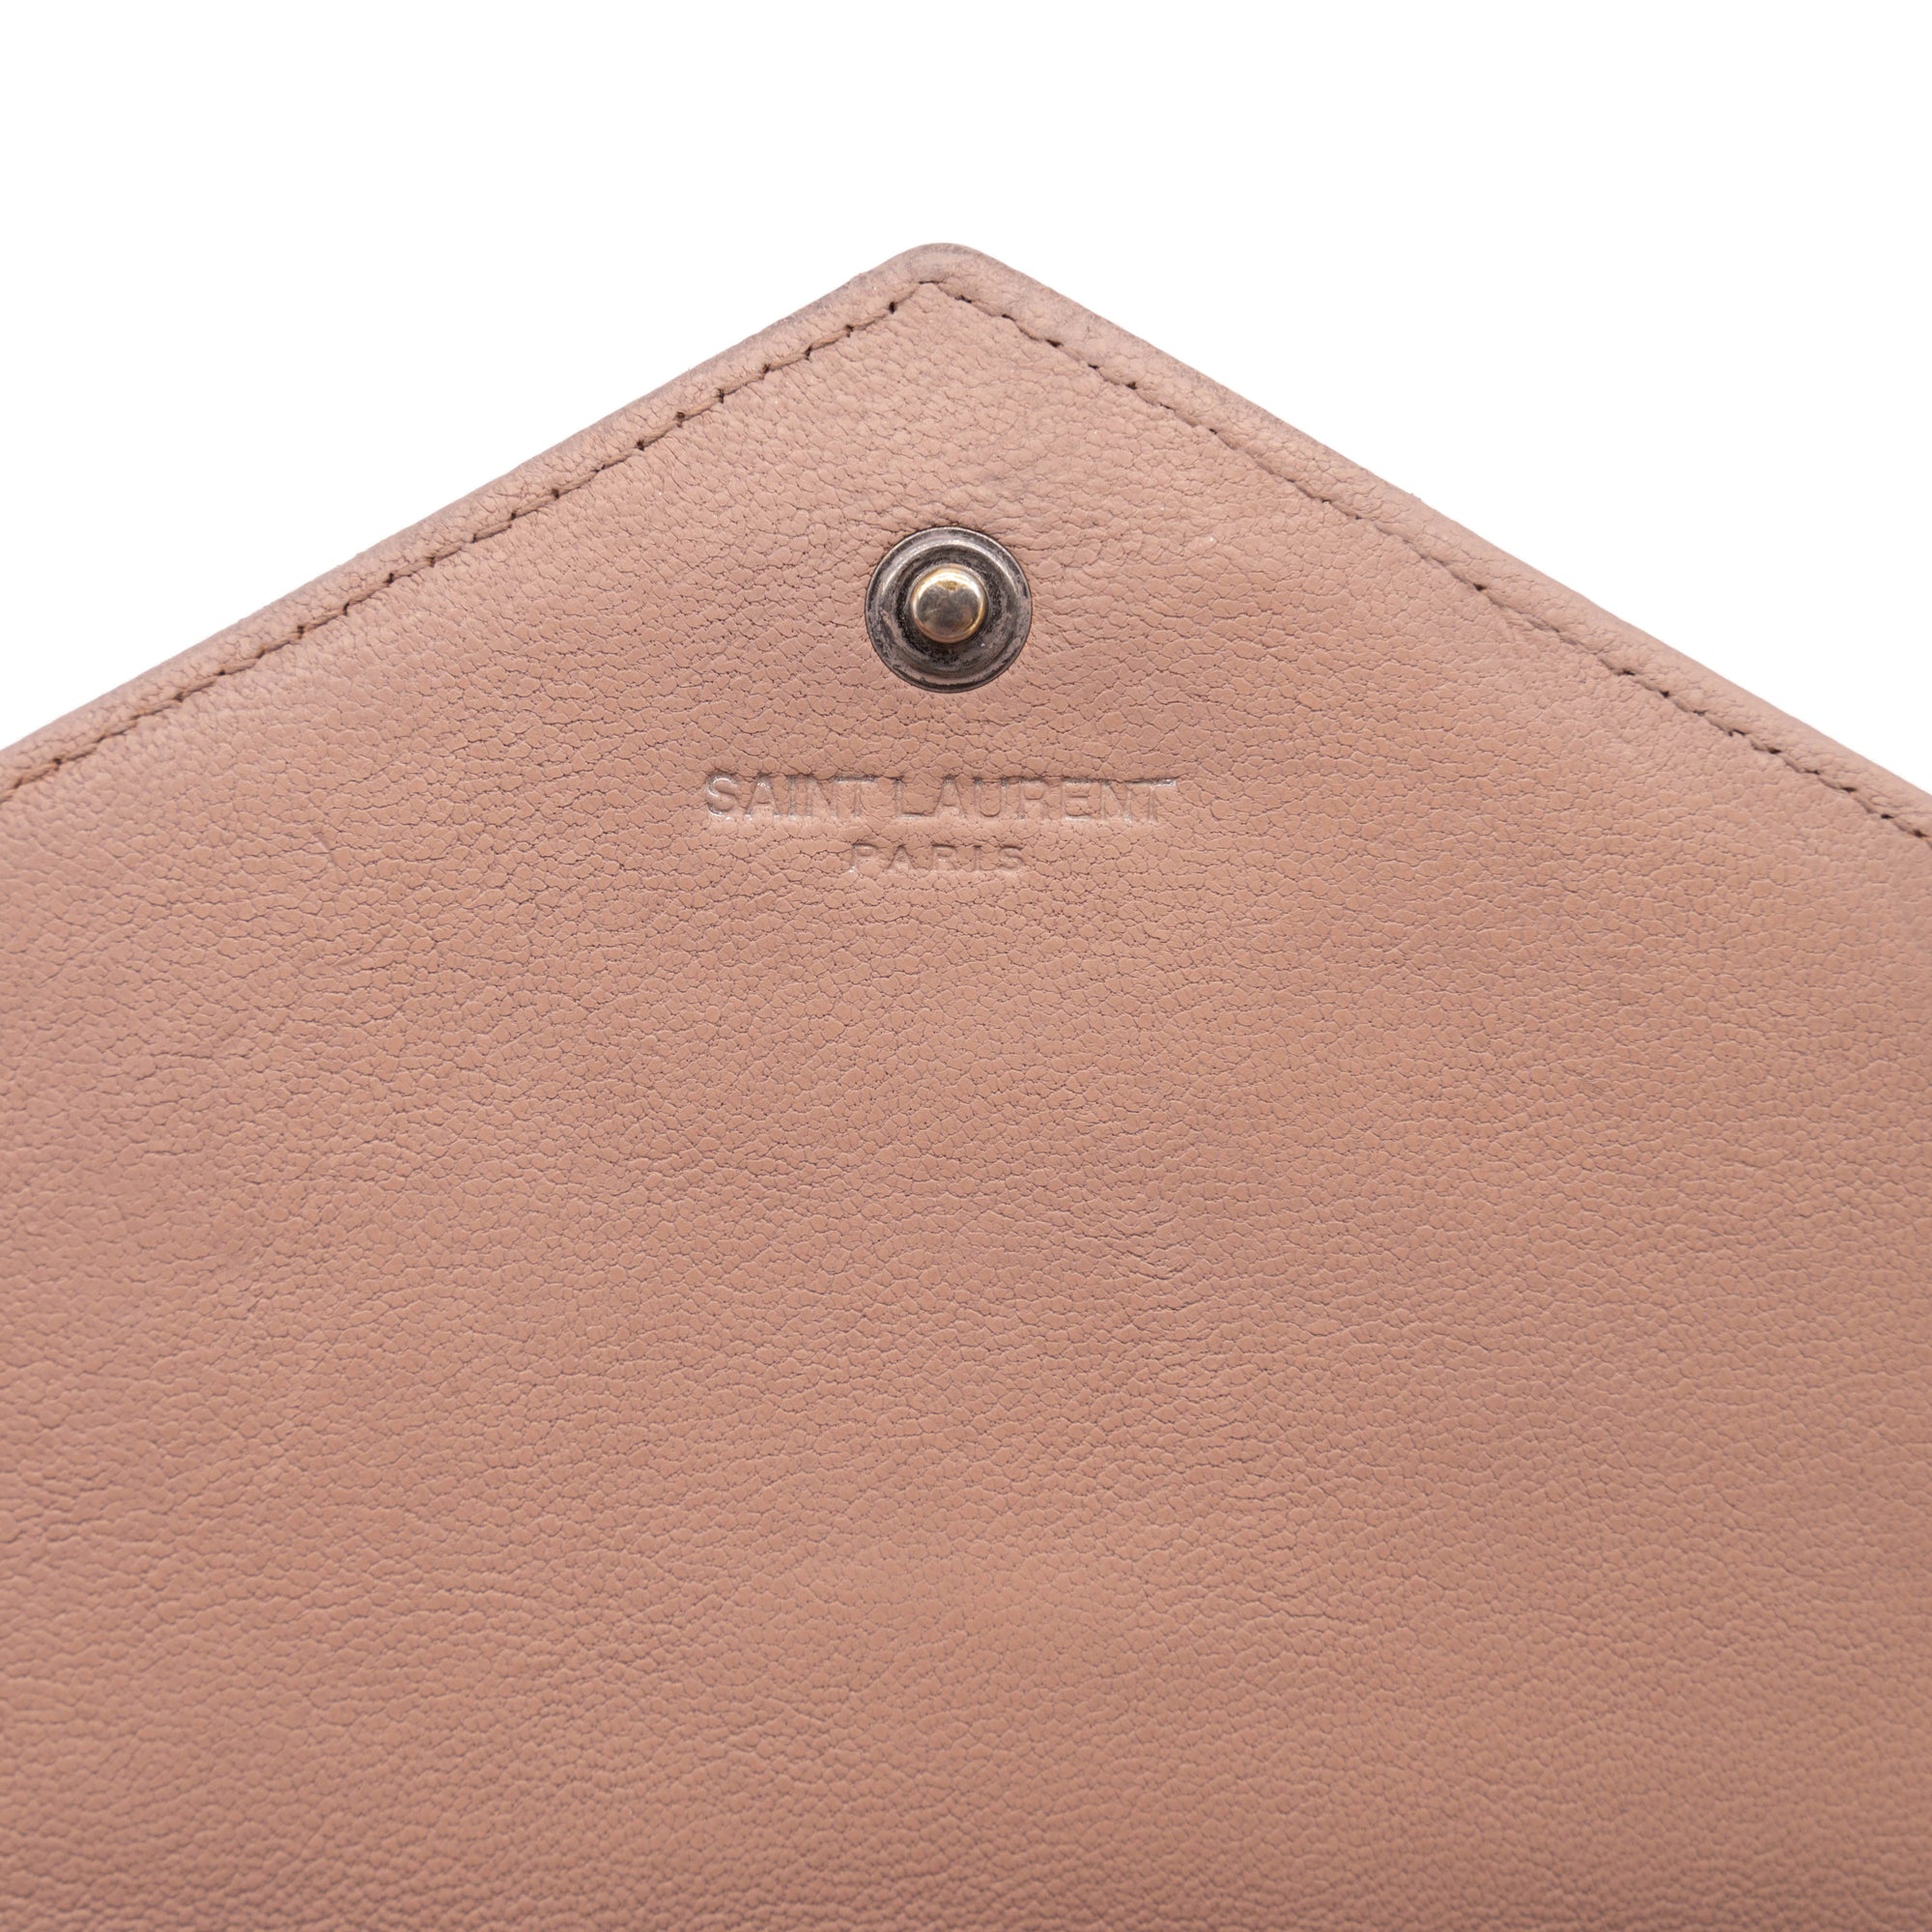 Saint Laurent Monogram Leather Phone Holder Bag in Pink